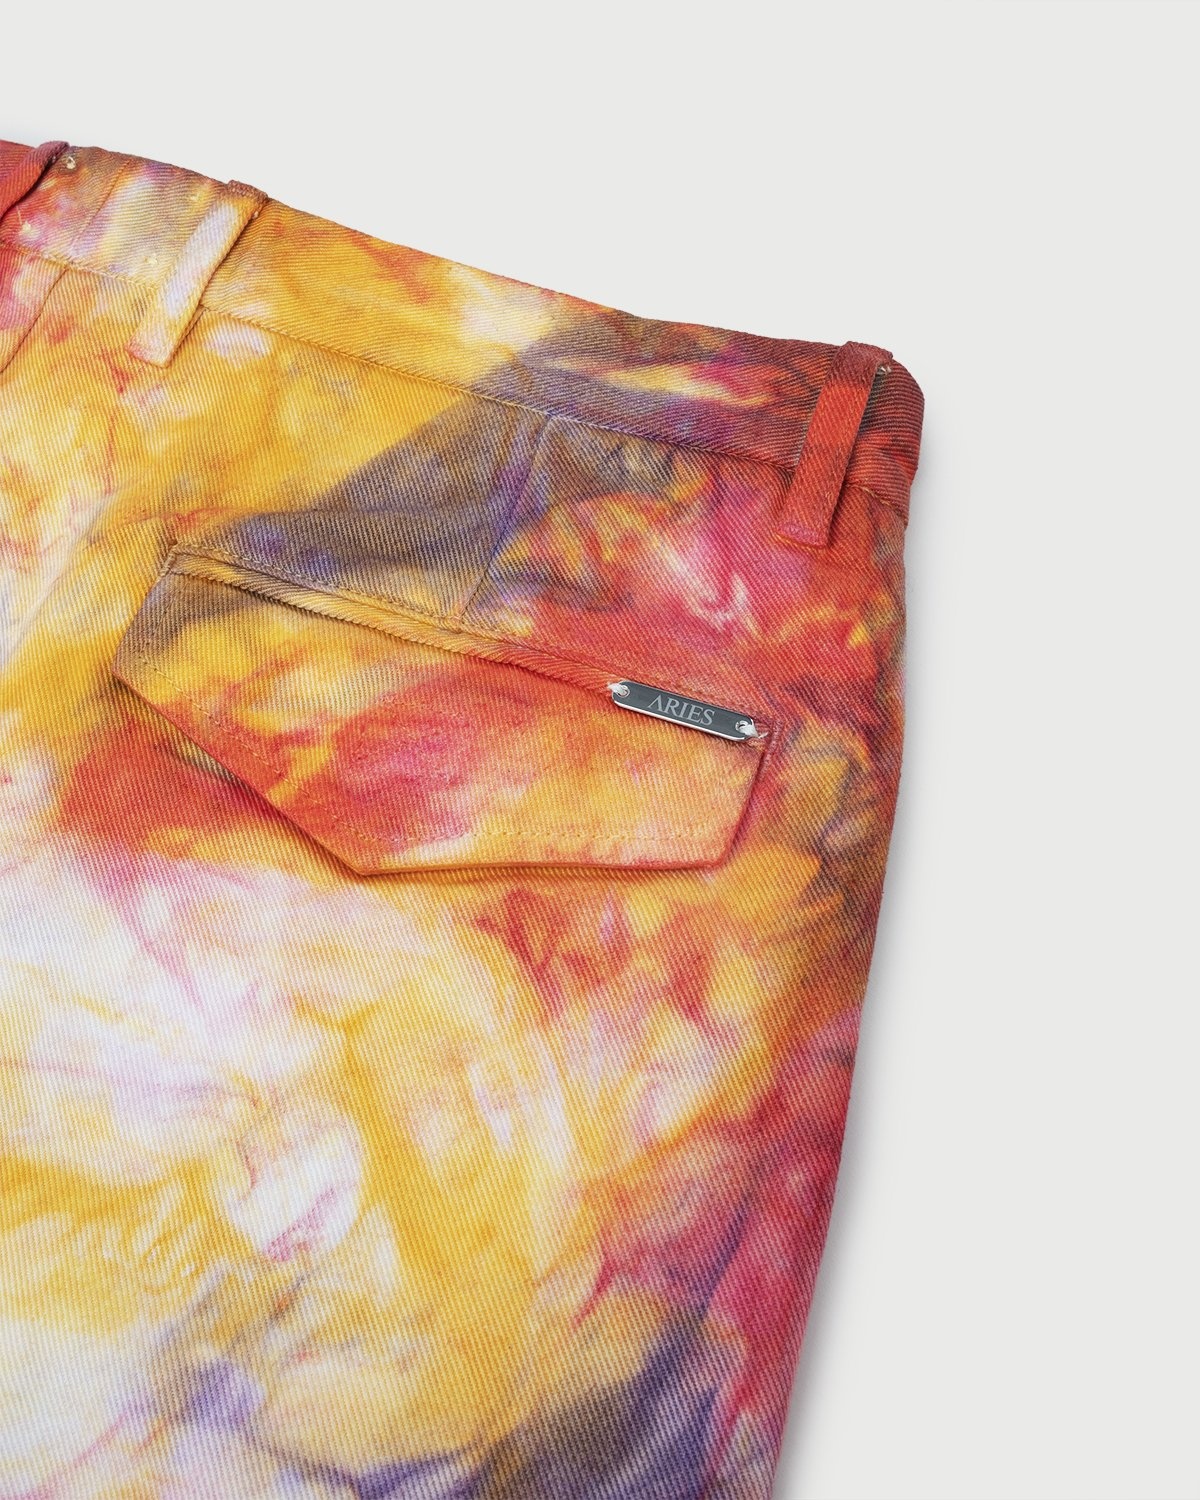 Aries – Tie Dye Chino Shorts Multicolor - Bermuda Cuts - Multi - Image 4